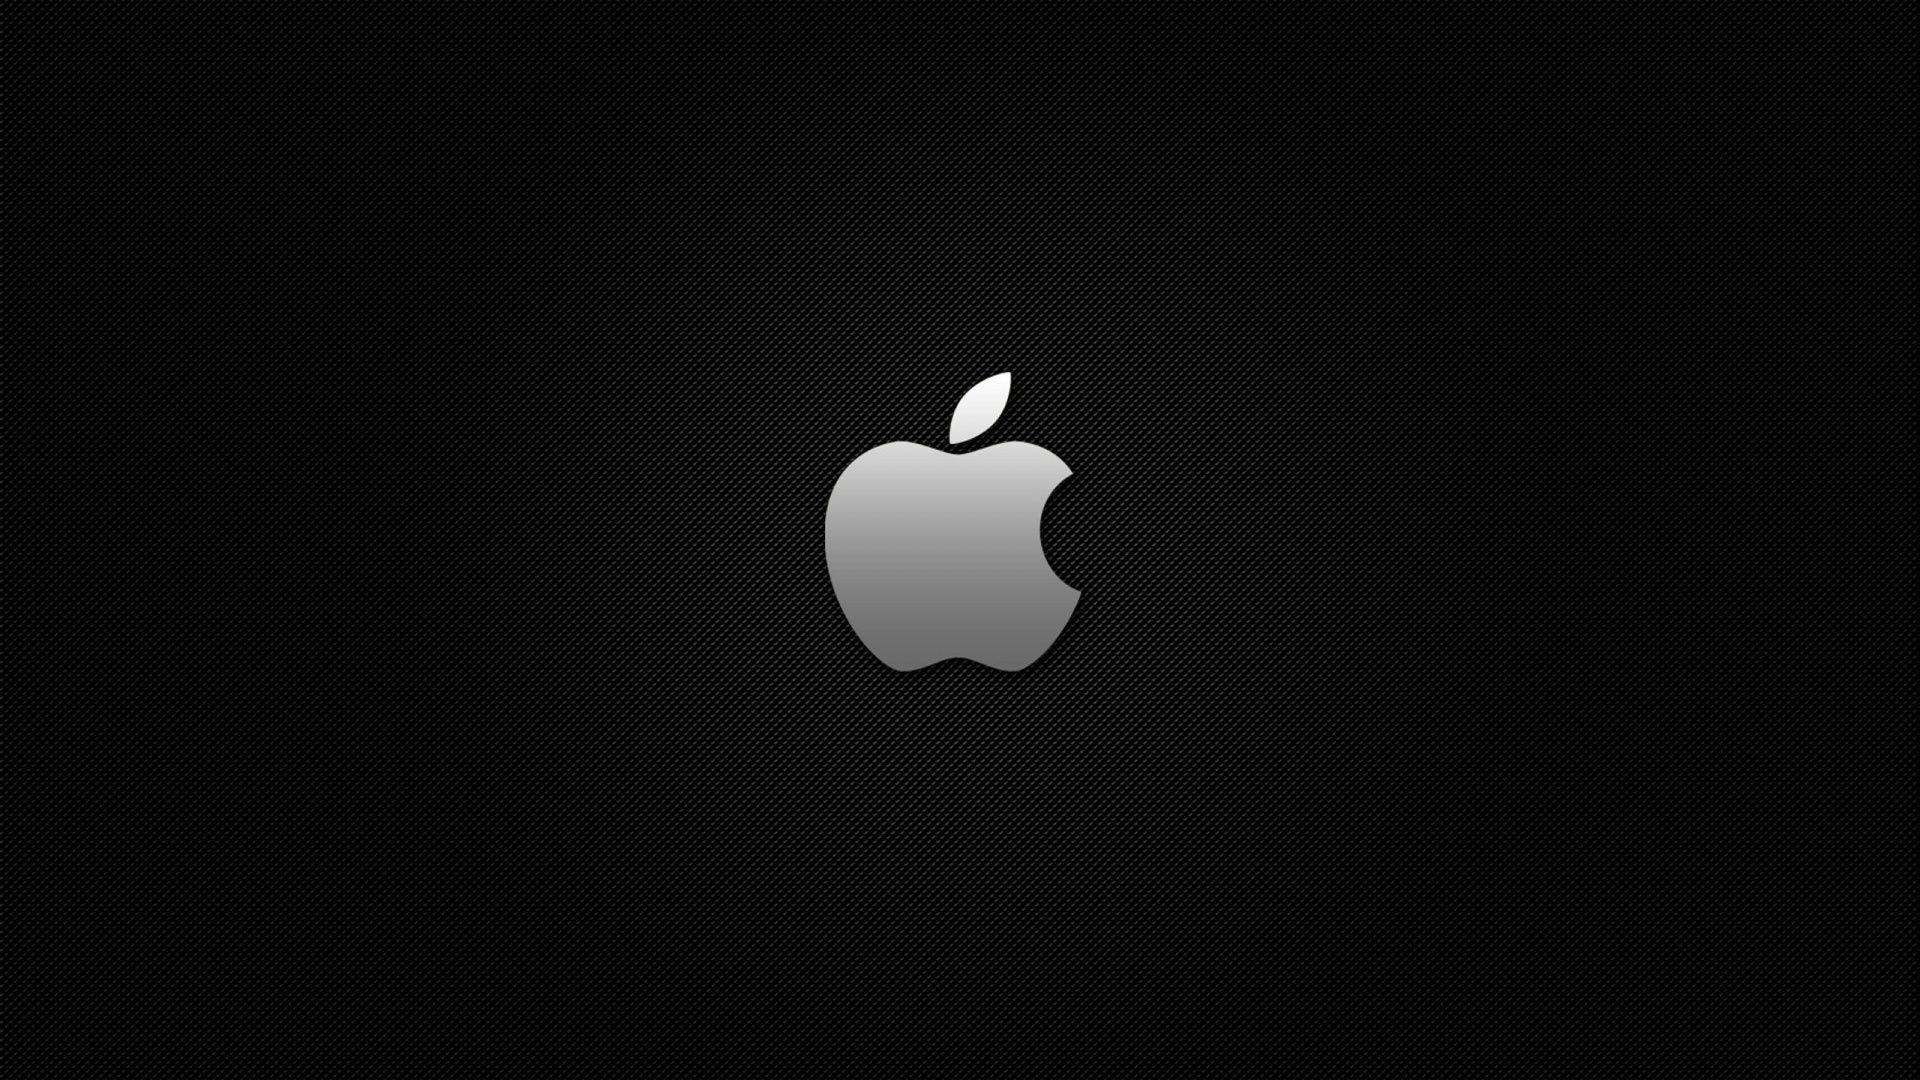 Black Apple Logo Wallpaper HD Wallpaper. Apple logo wallpaper, Black apple logo, Black apple wallpaper